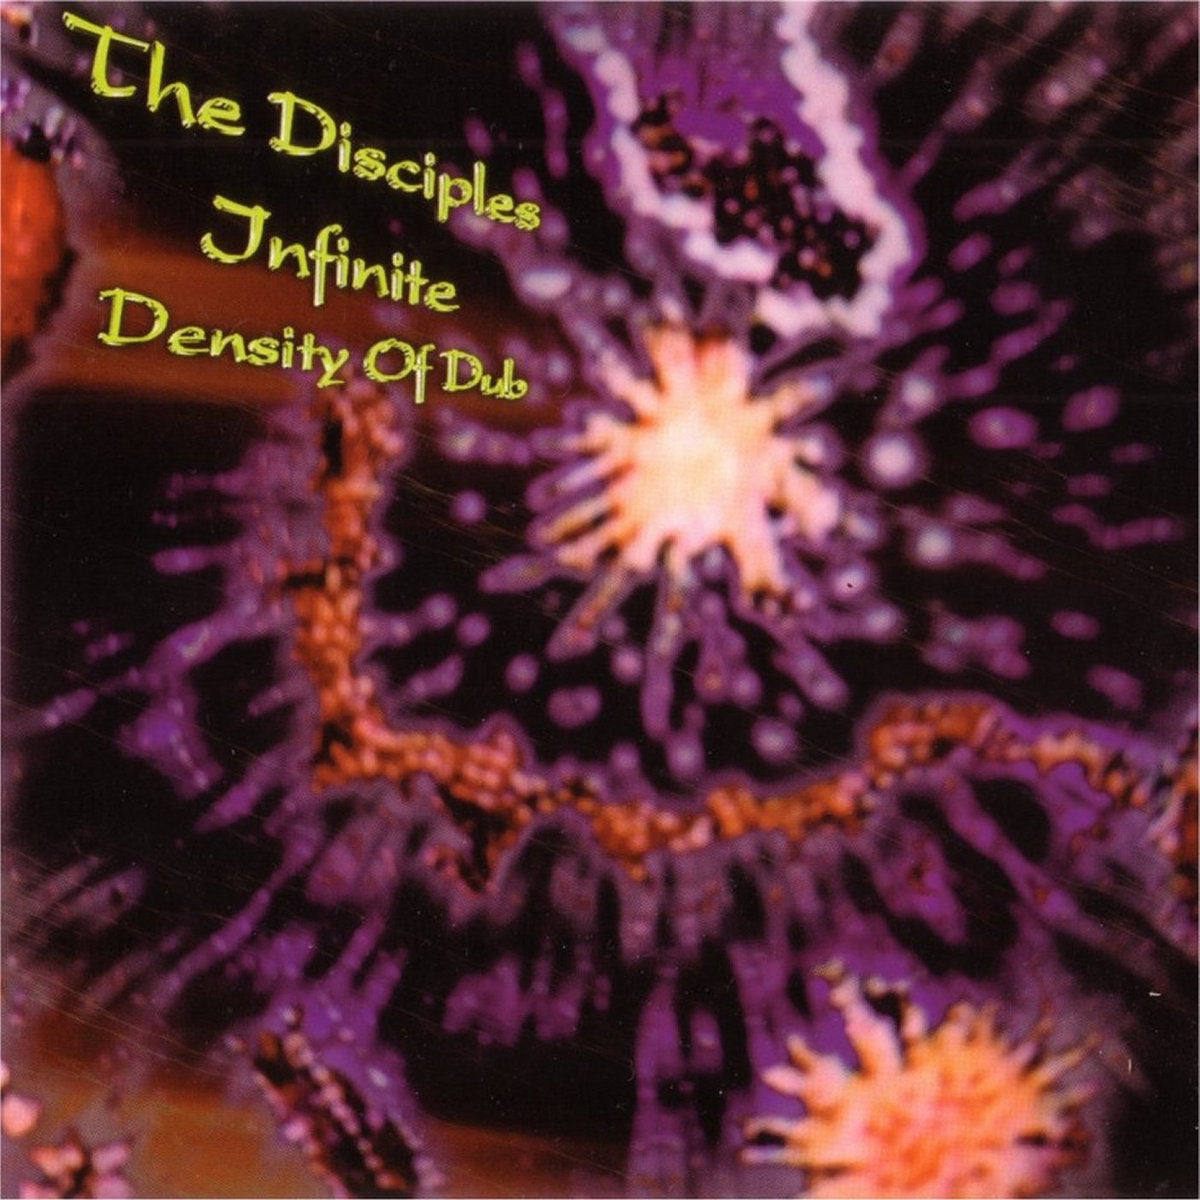 THE DISCIPLES - Infinite Density Of Dub - LP - Vinyl